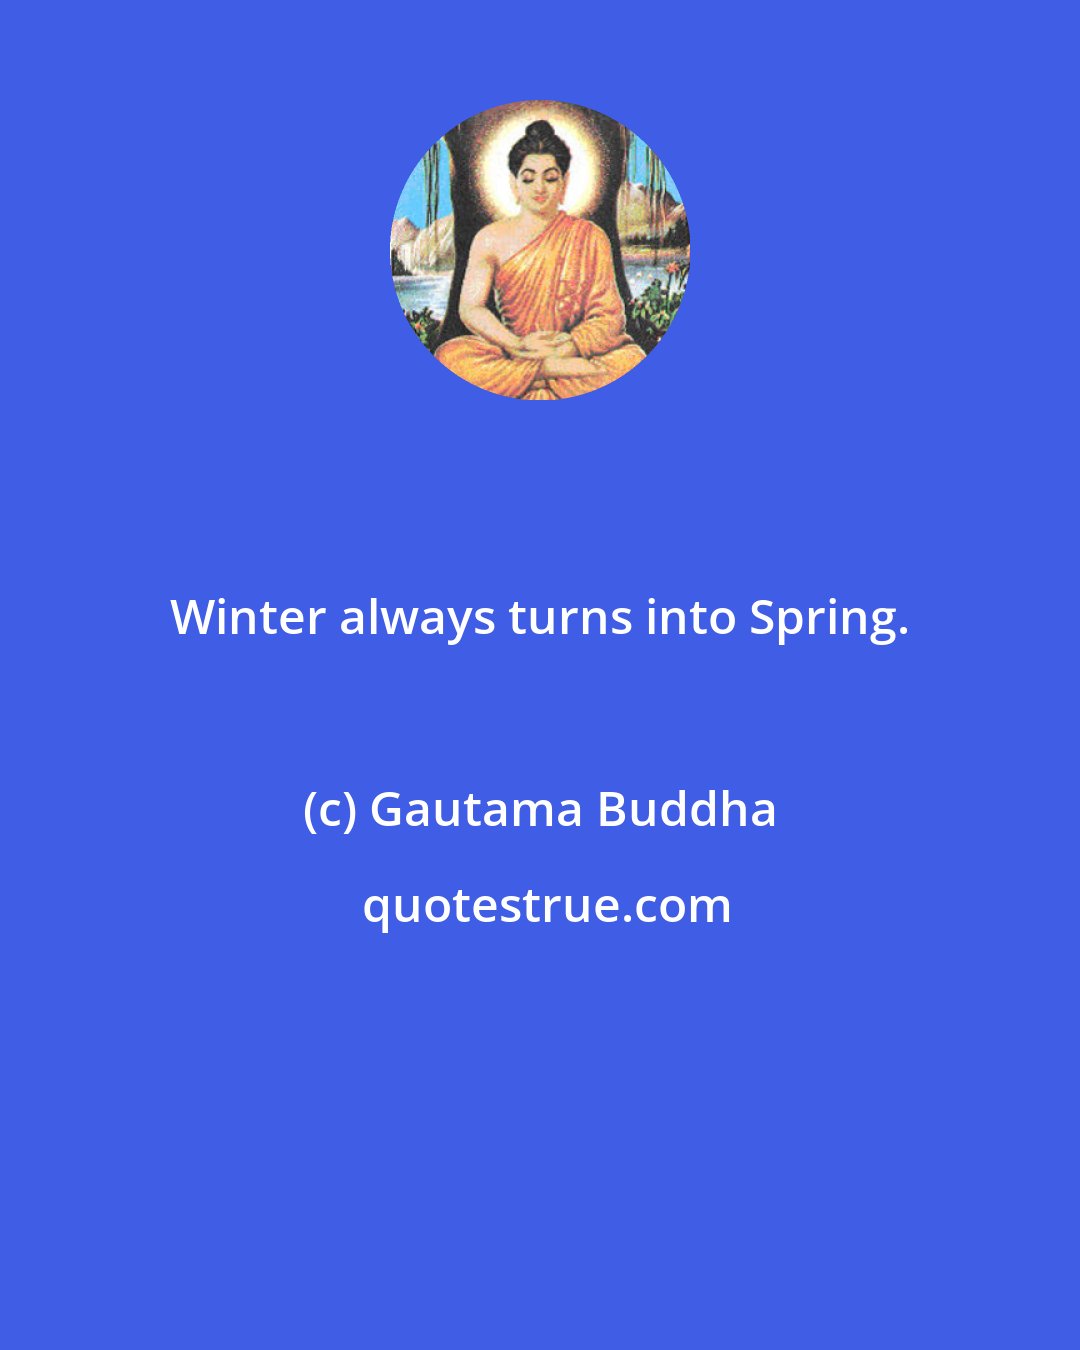 Gautama Buddha: Winter always turns into Spring.